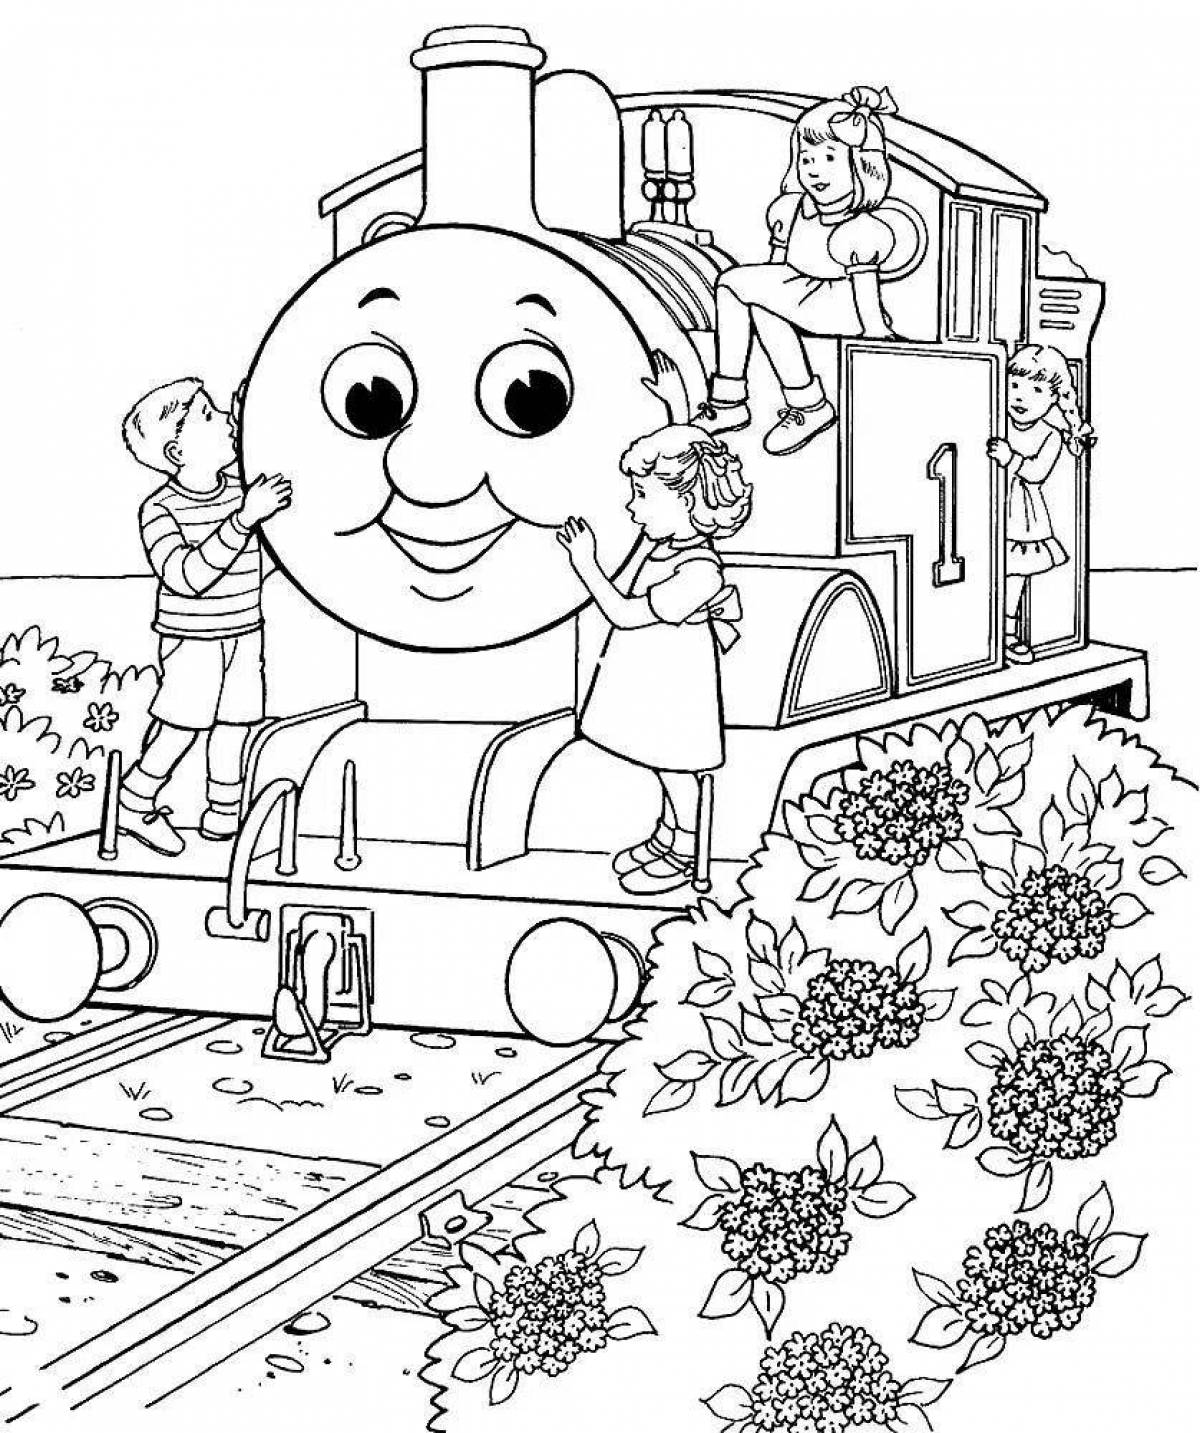 Thomas train fun coloring book